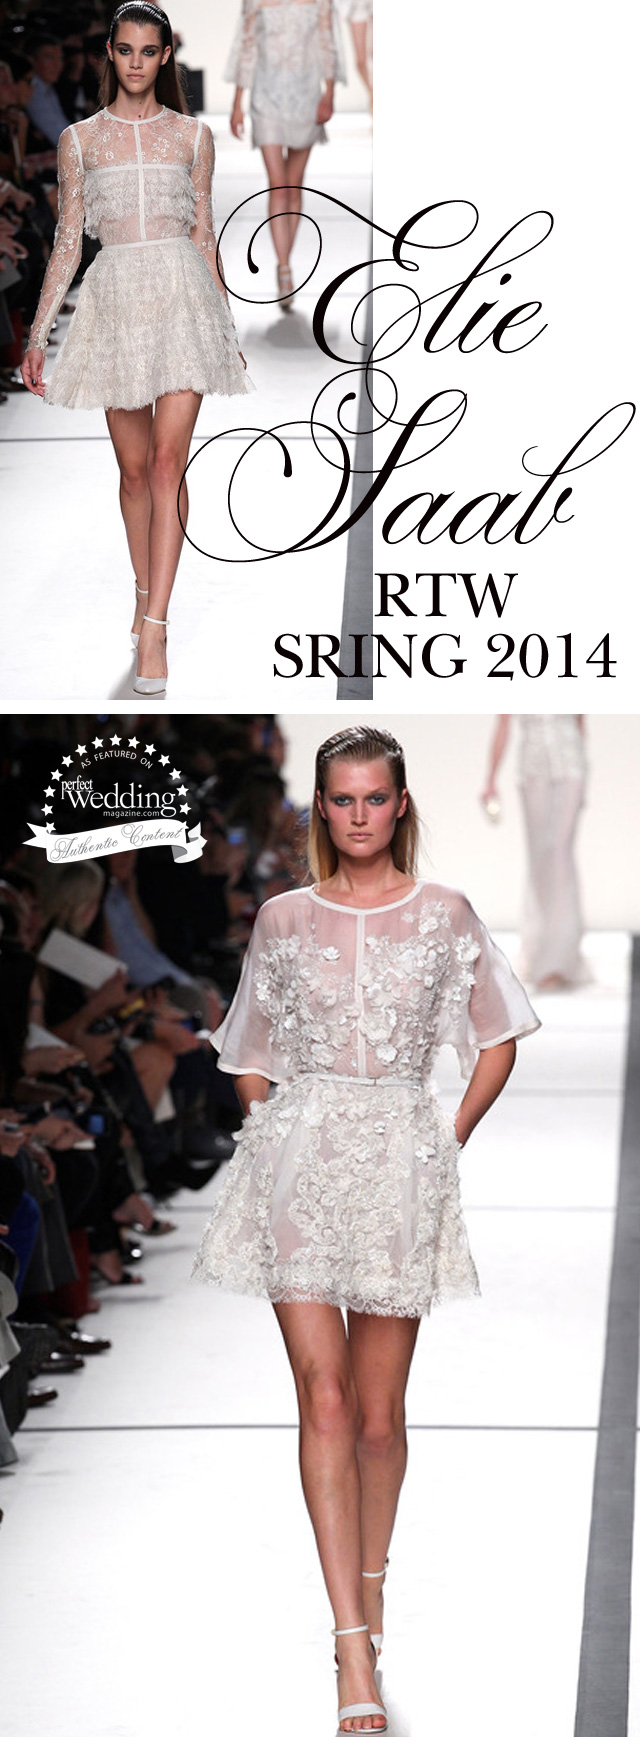 Elie Saab RTW Spring 2014, Perfect Wedding Magazine blog, Lace Gowns